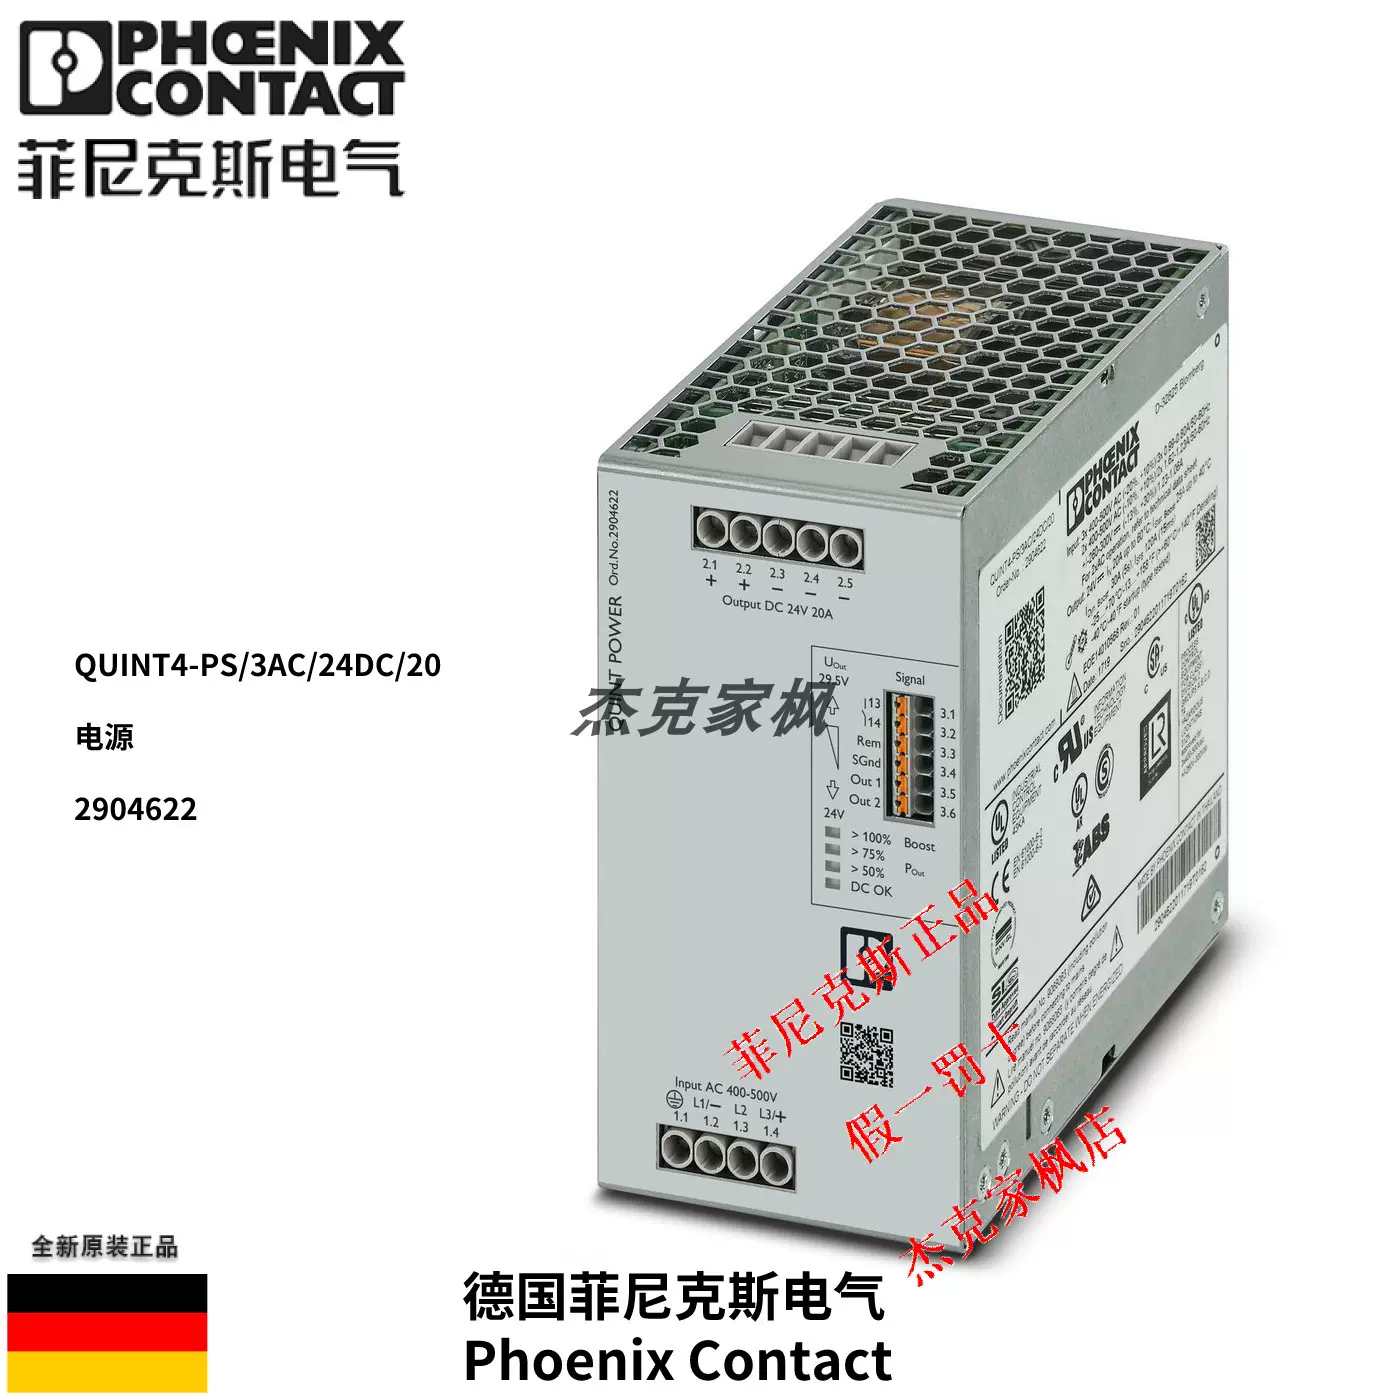 QUINT4-PS/3AC/24DC/20 - 2904622菲尼克斯電源Phoenix 全新W-Taobao